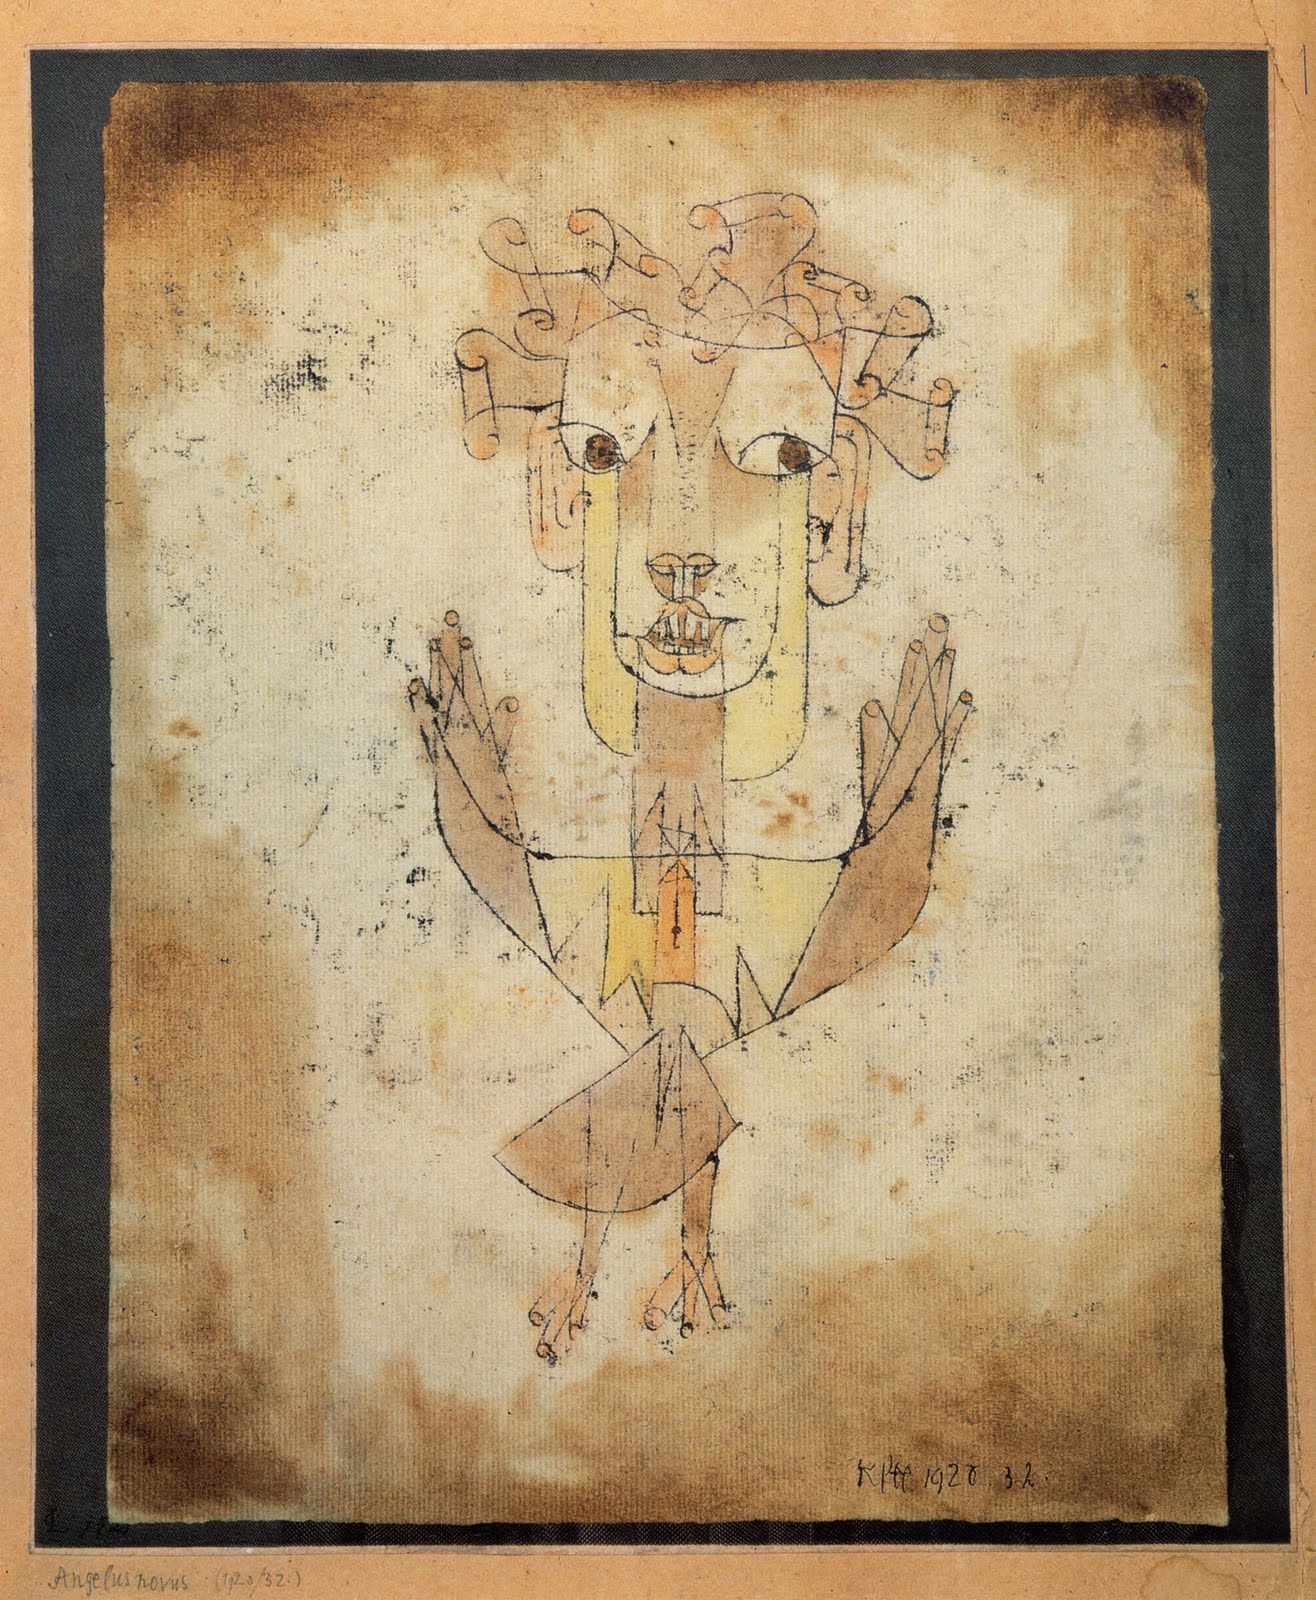 Angelus Novus. Paul Klee, 1920